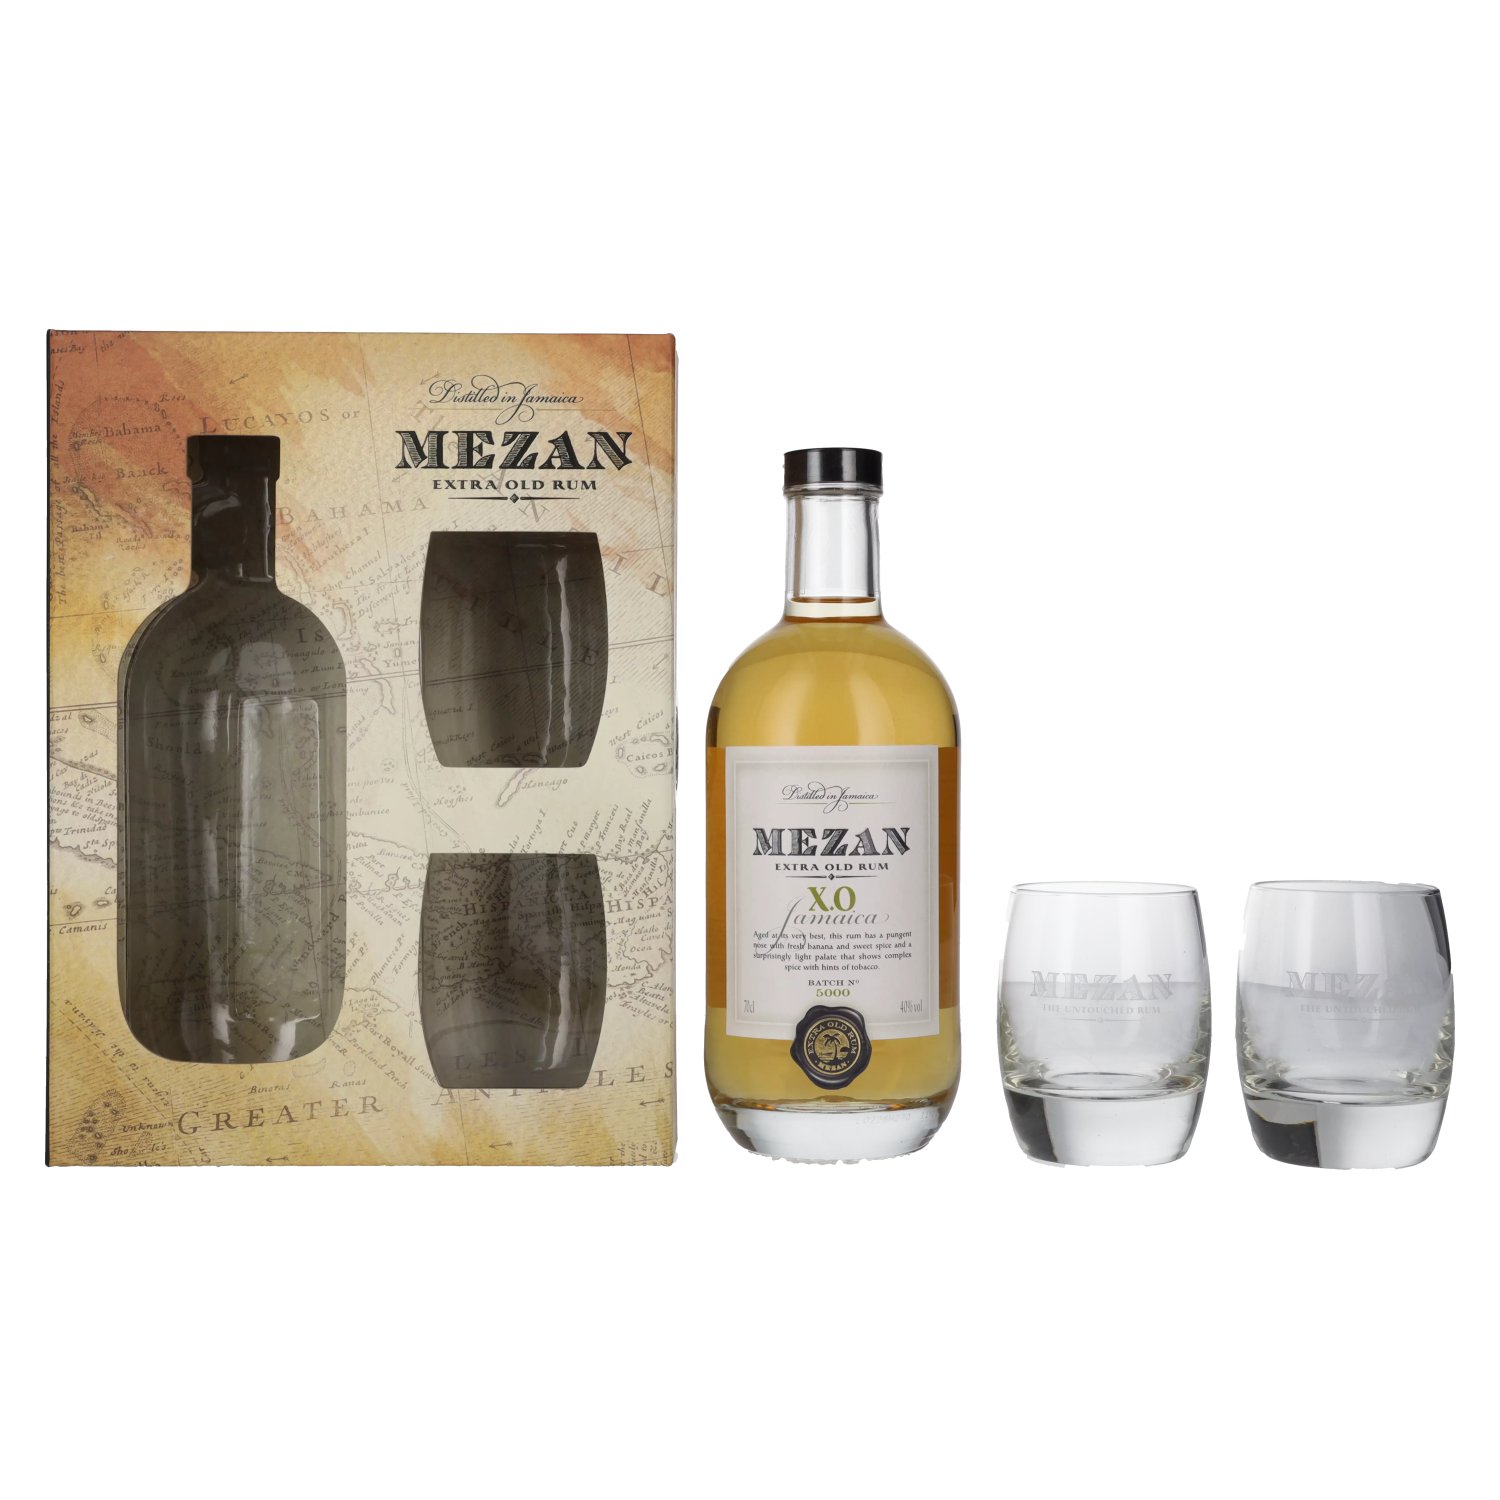 Mezan XO Jamaican Rum 40% Vol. 0,7l in Giftbox with 2 glasses